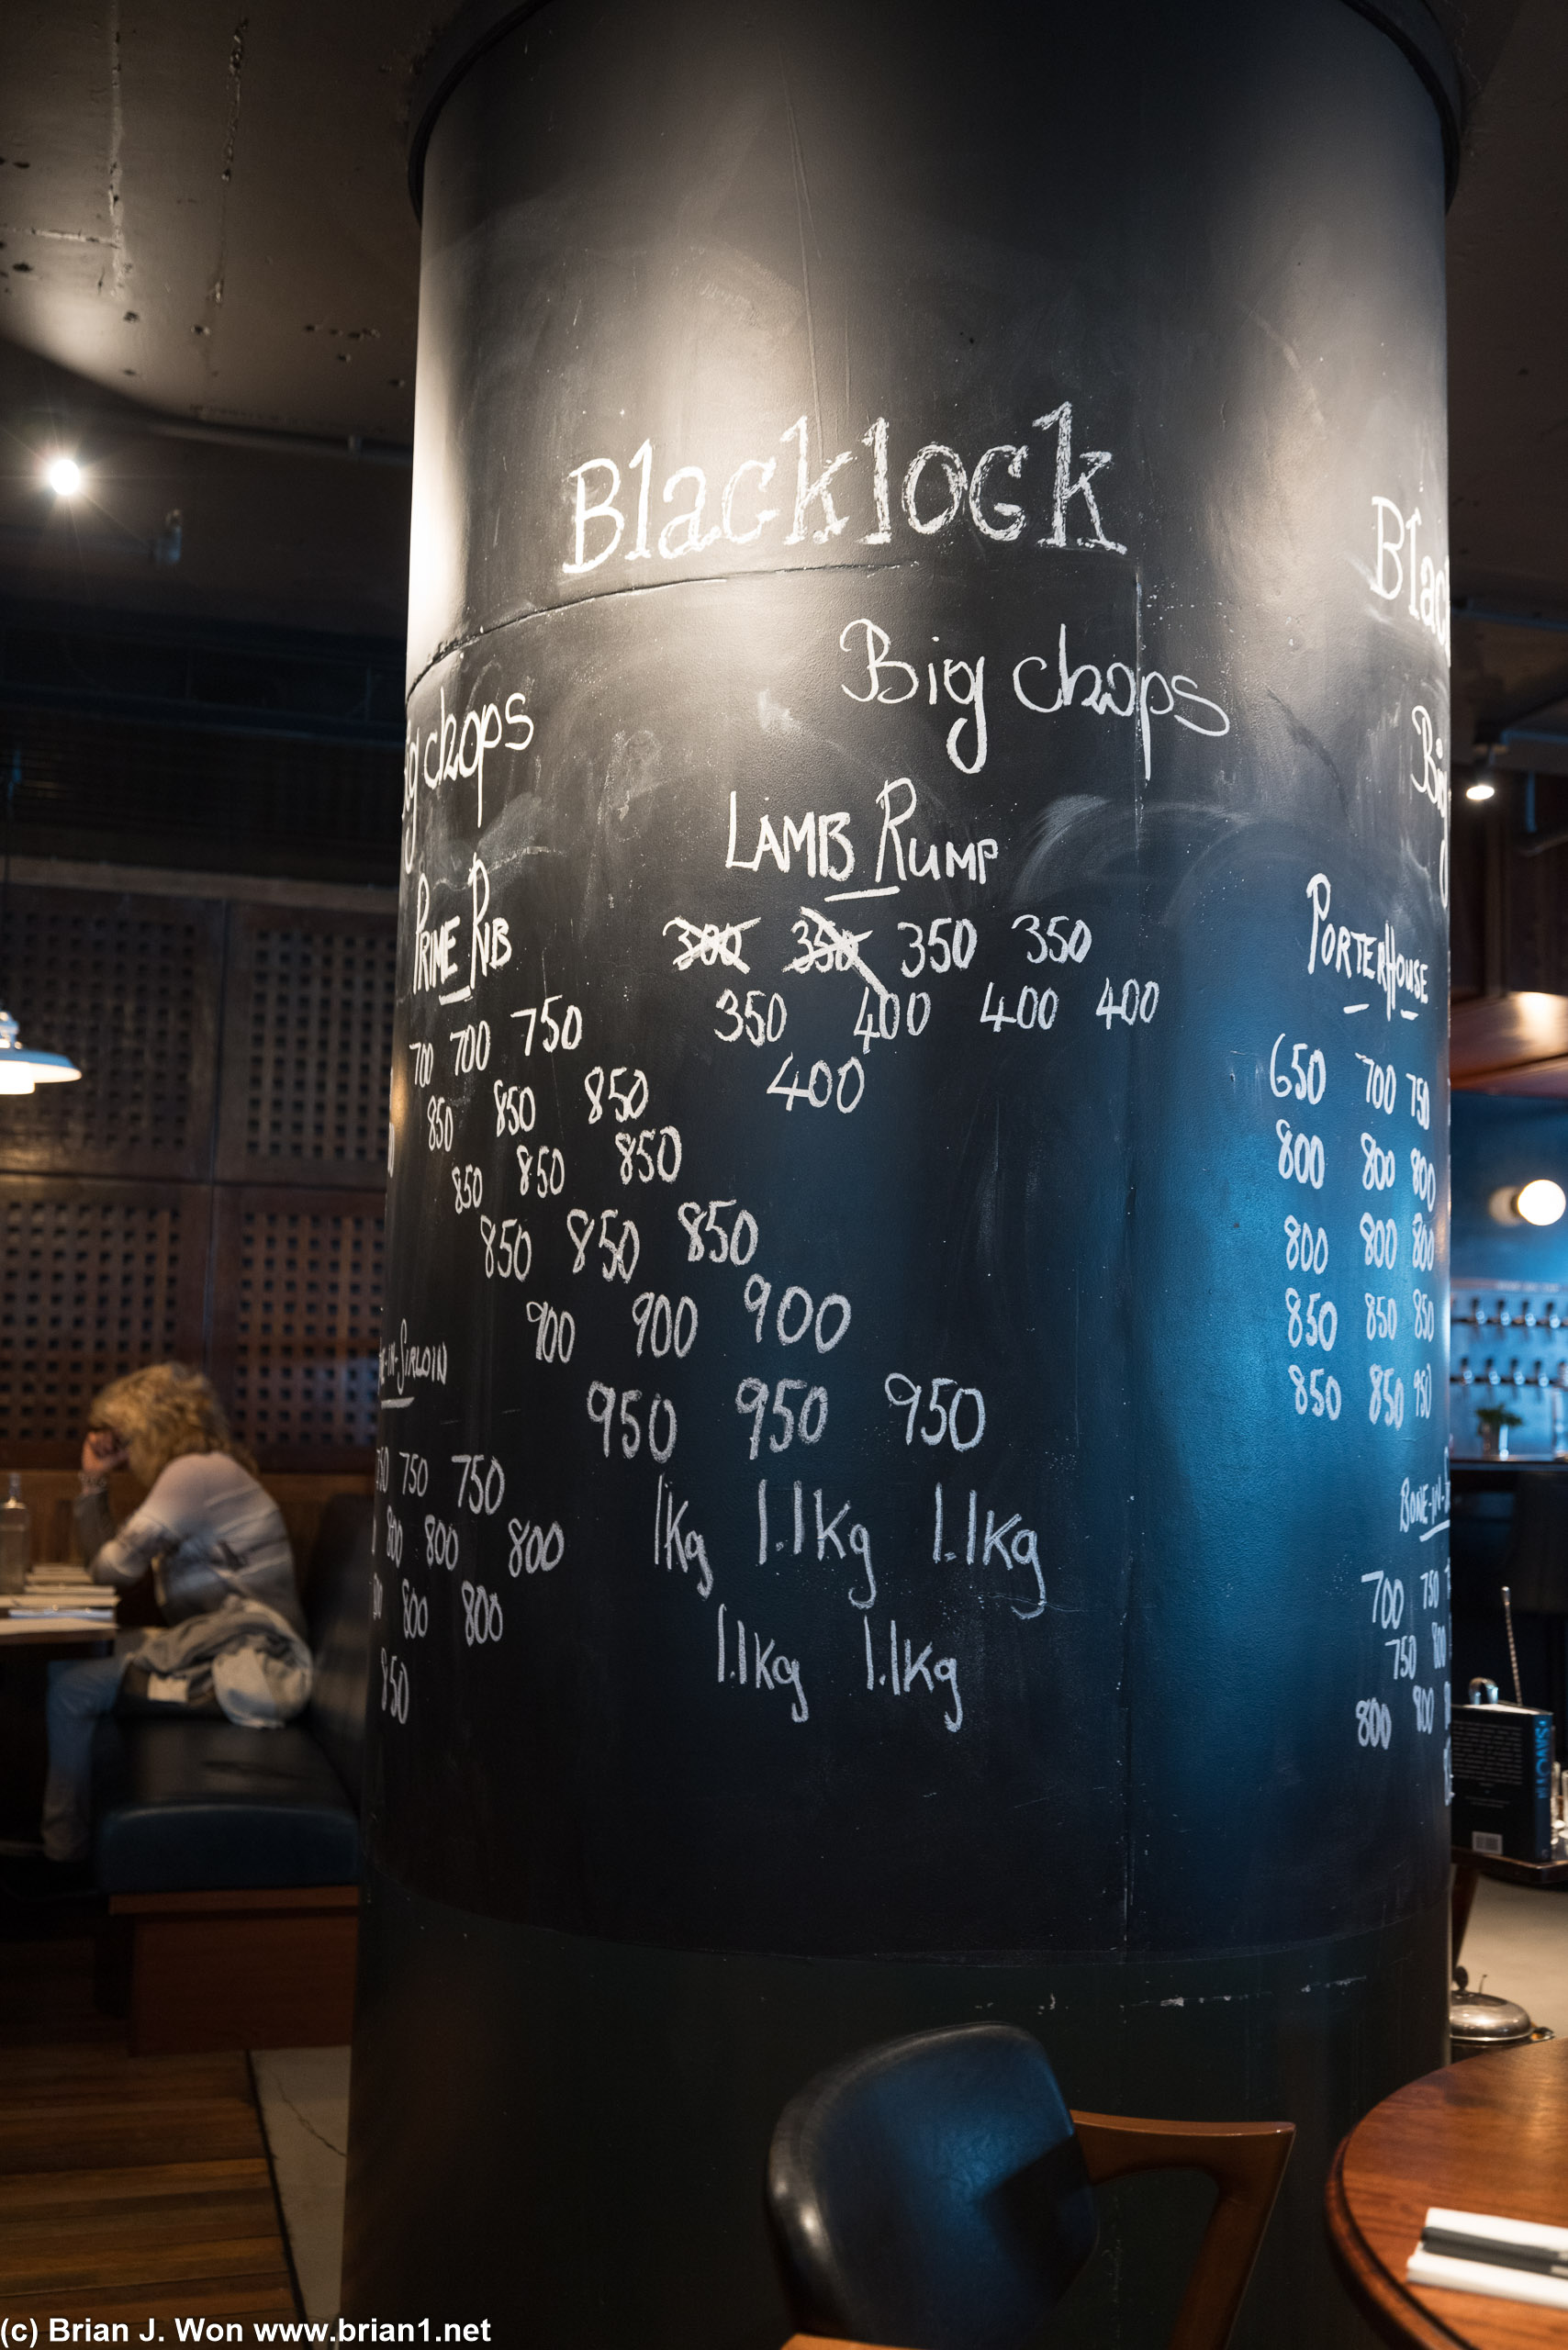 Blacklock's selection of big chops.